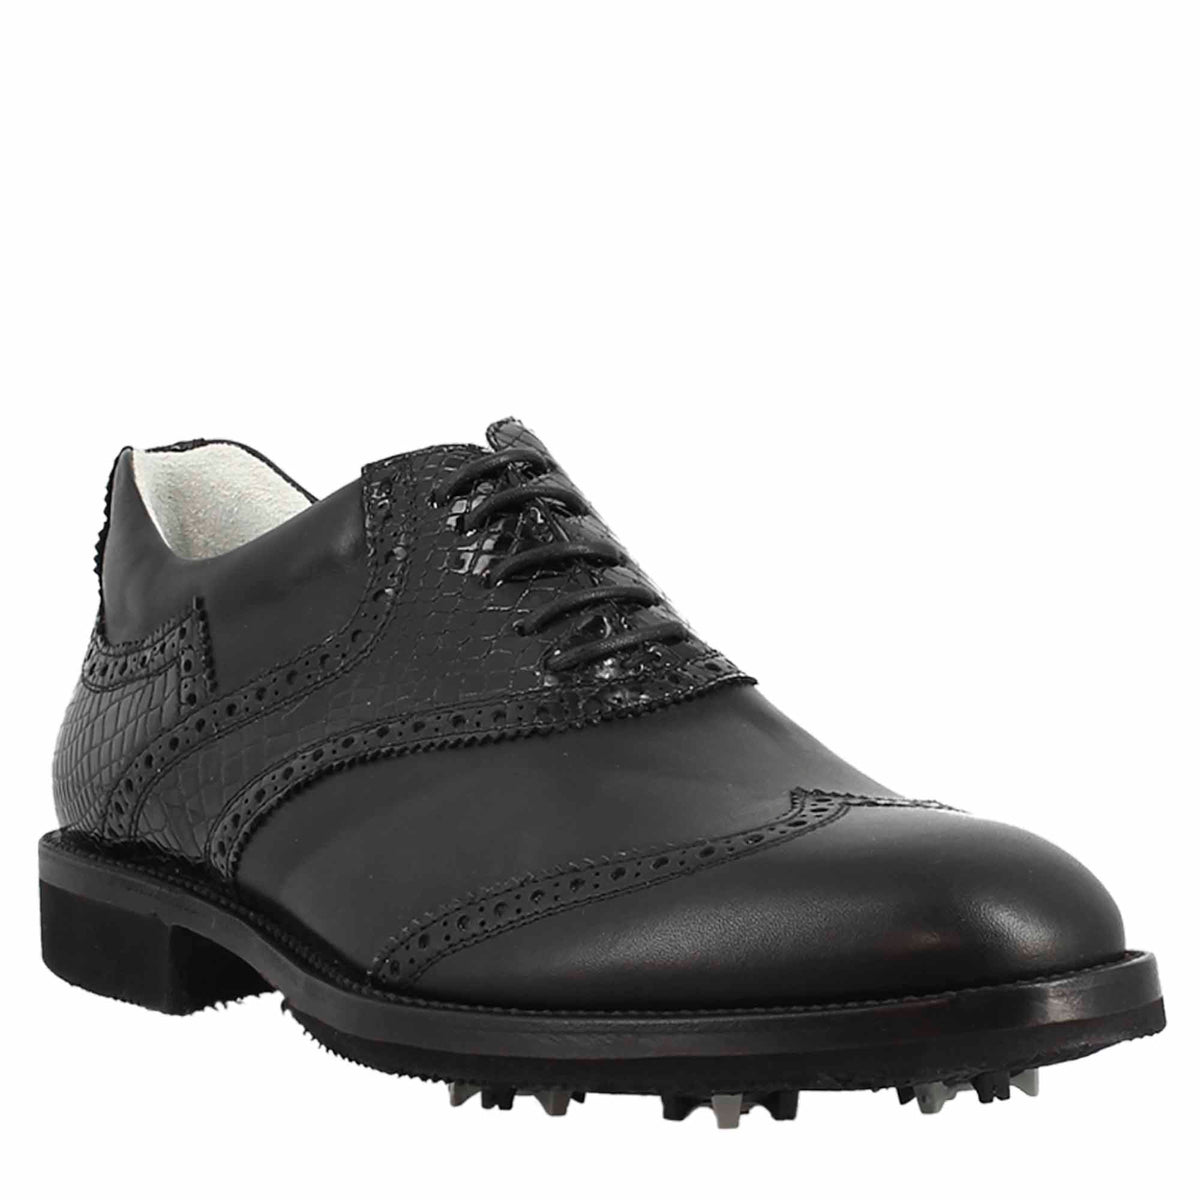 Men's golf shoes black coconut leather handcrafted brogue details